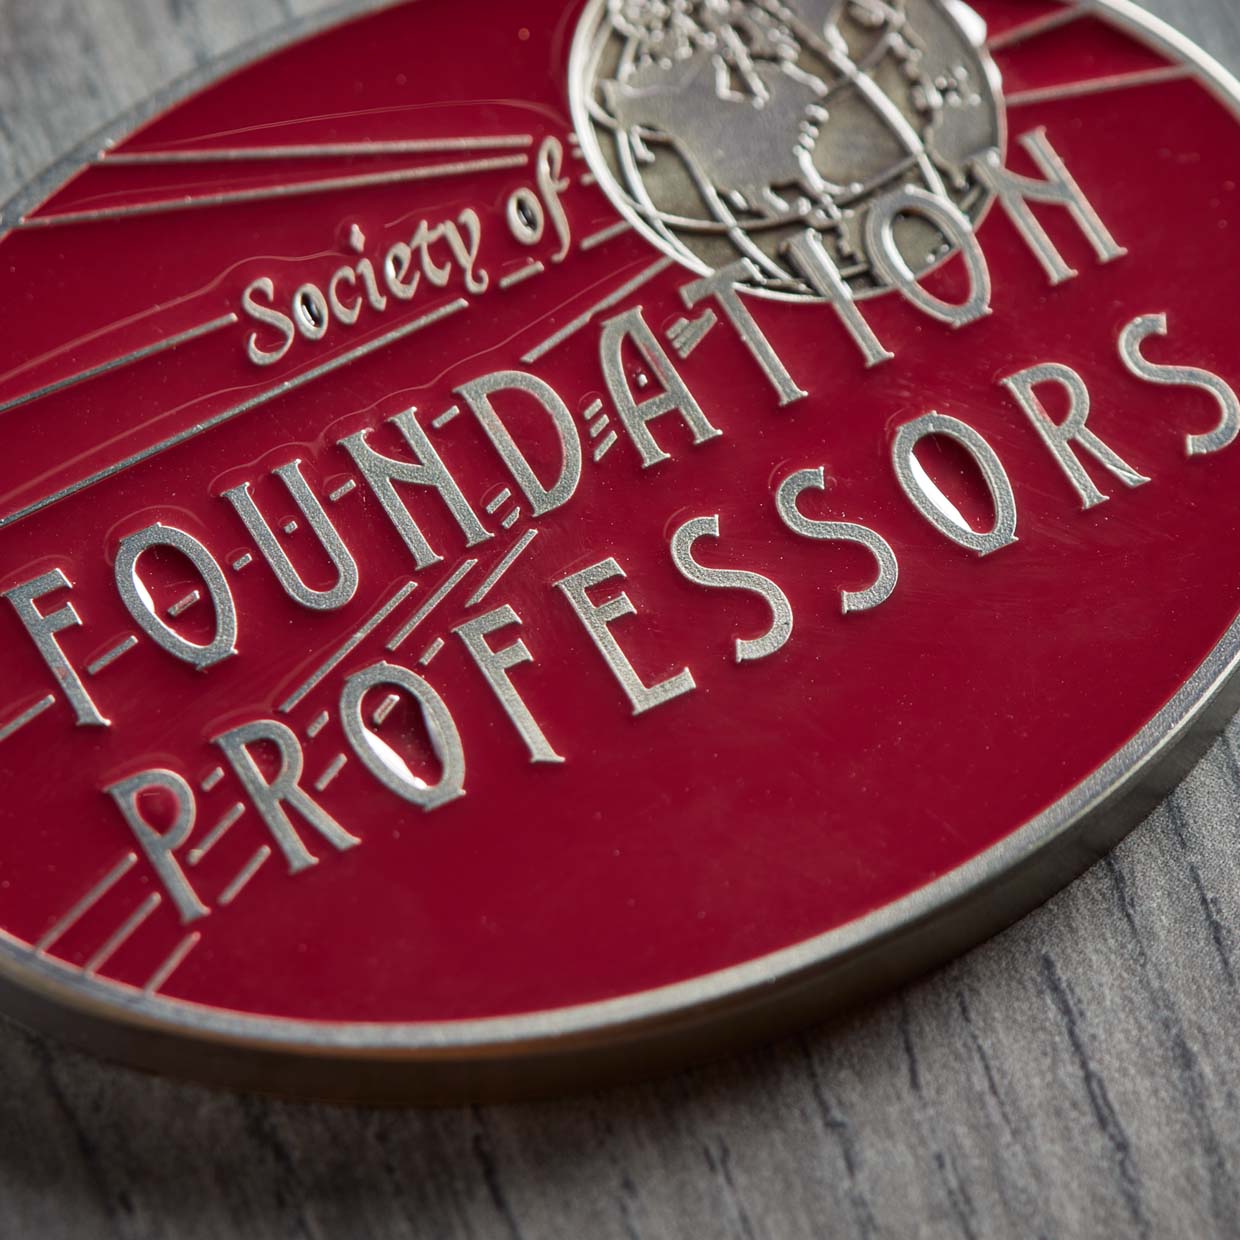 Society of Foundation Professors Medal Detail